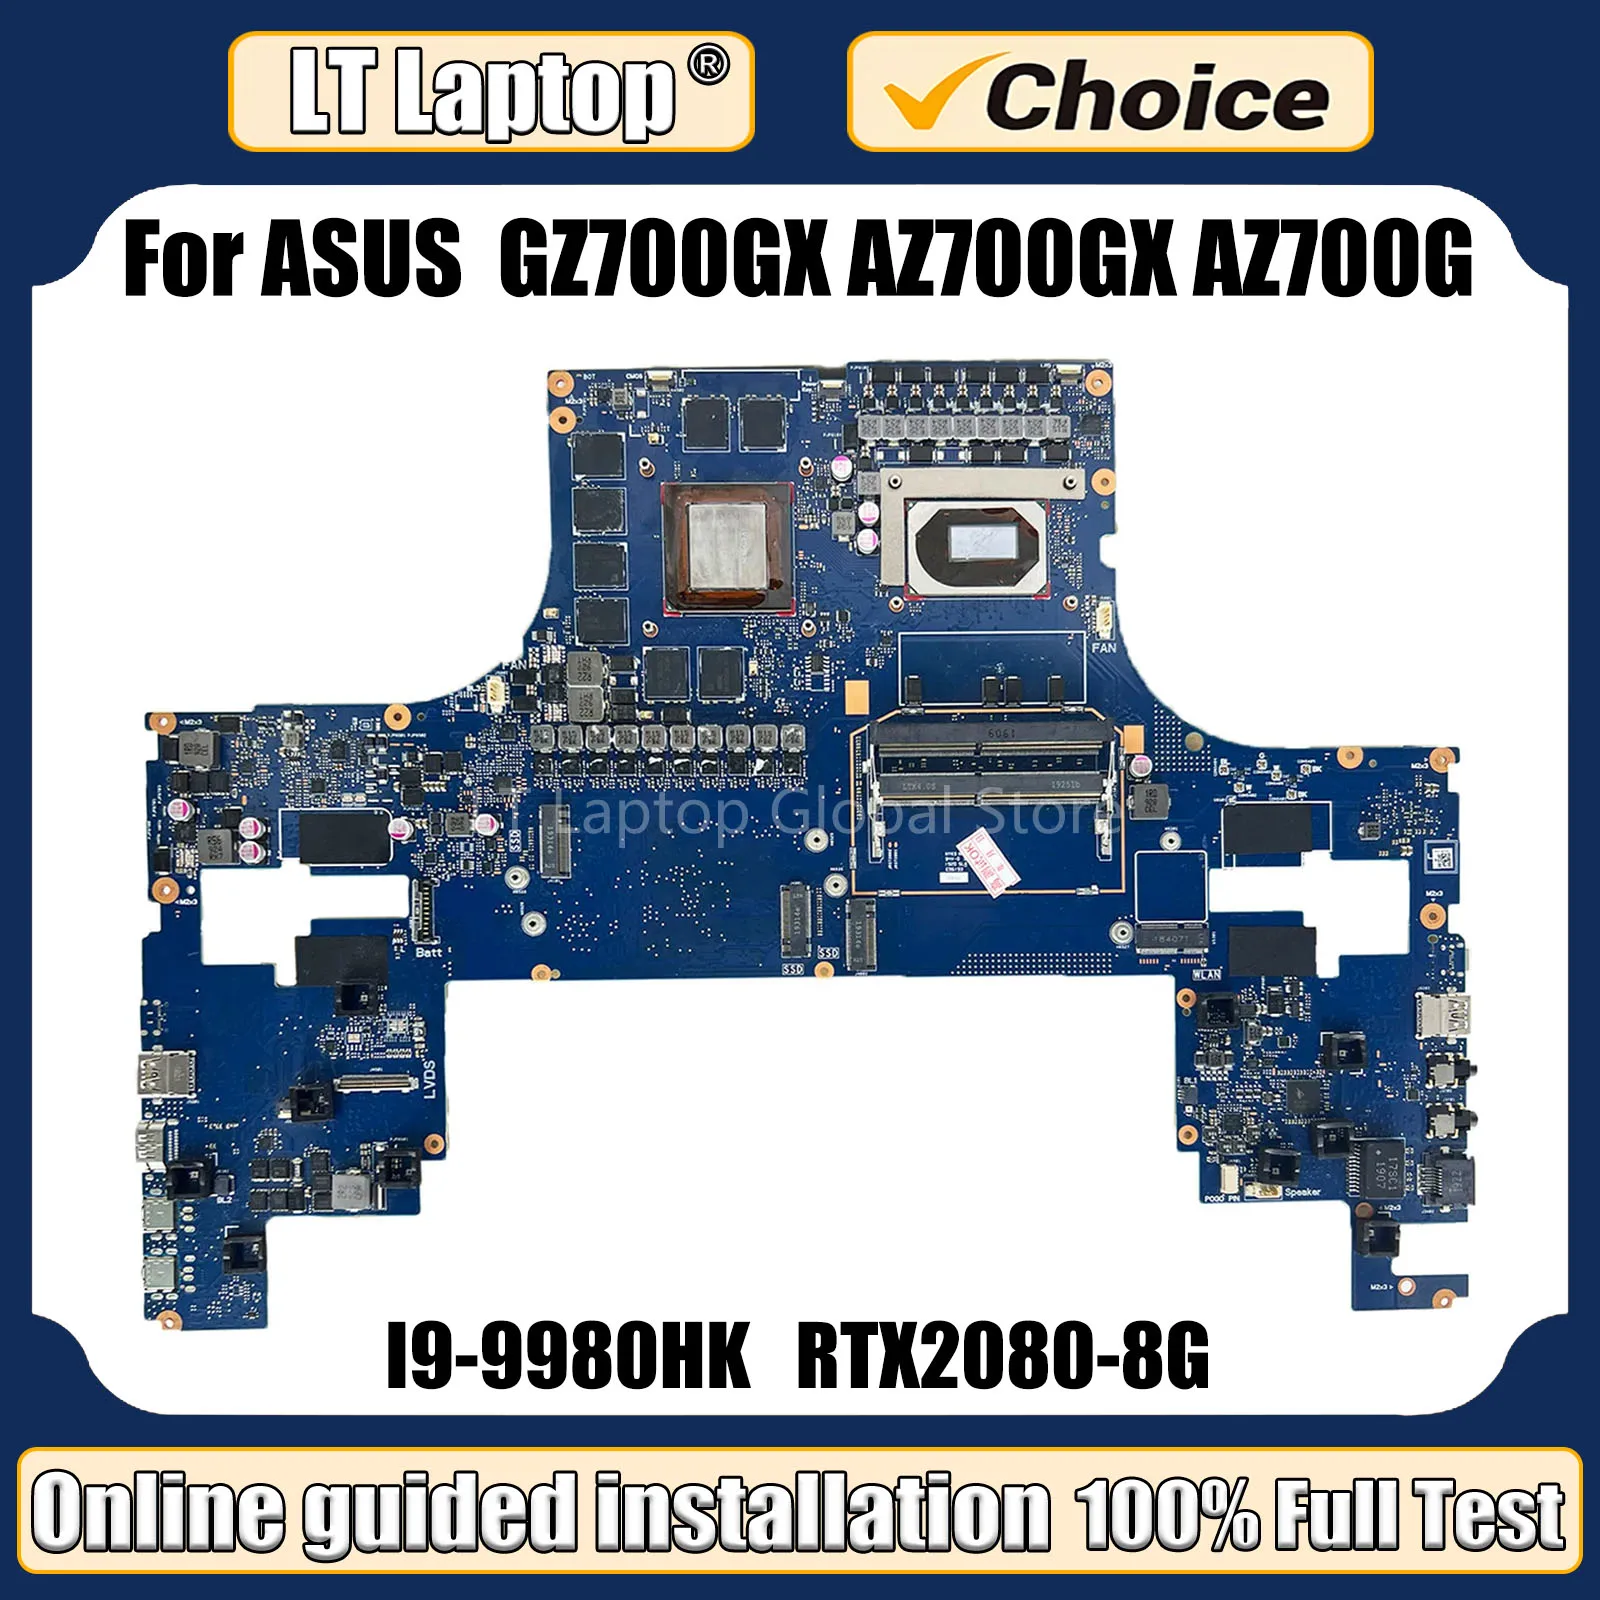 

LT Laptop GZ700GX Mainboard For ASUS AZ700GX AZ700G GZ700G Laptop Motherboard CPU I9-9980HK MAIN BOARD GPU RTX2080/8G